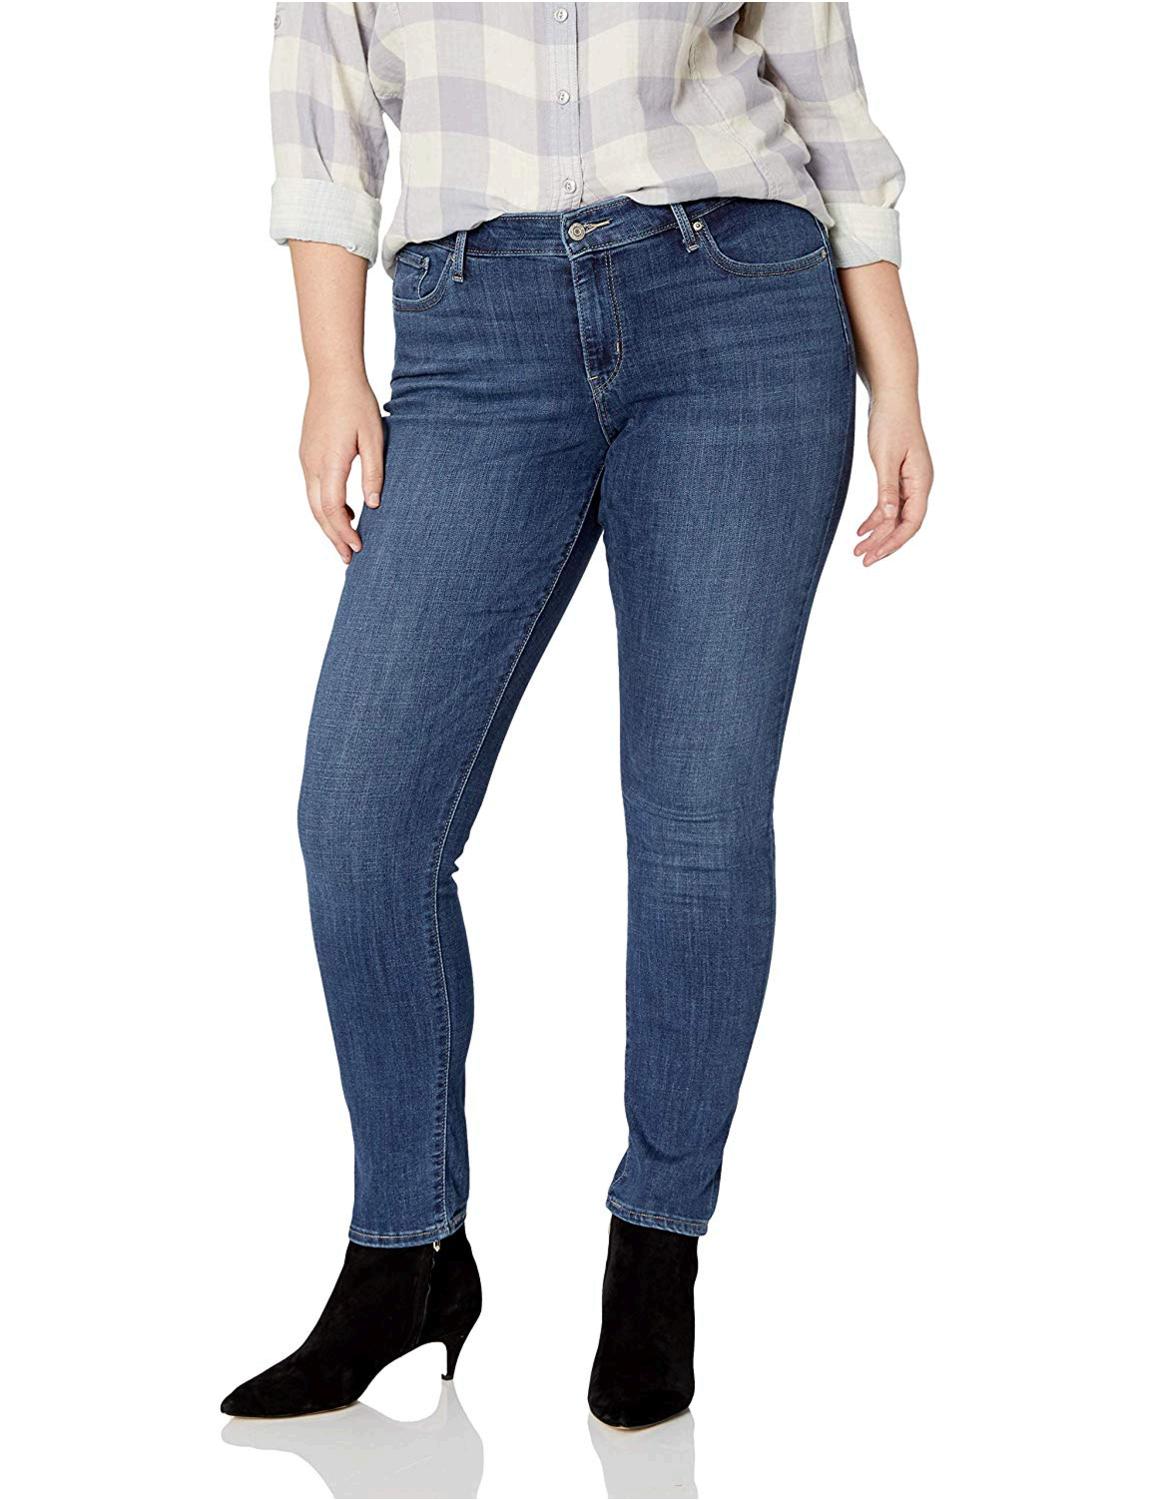 Levi's Women's 711 Skinny Jeans, Soft Clean White, 31, White, Size 31 ...